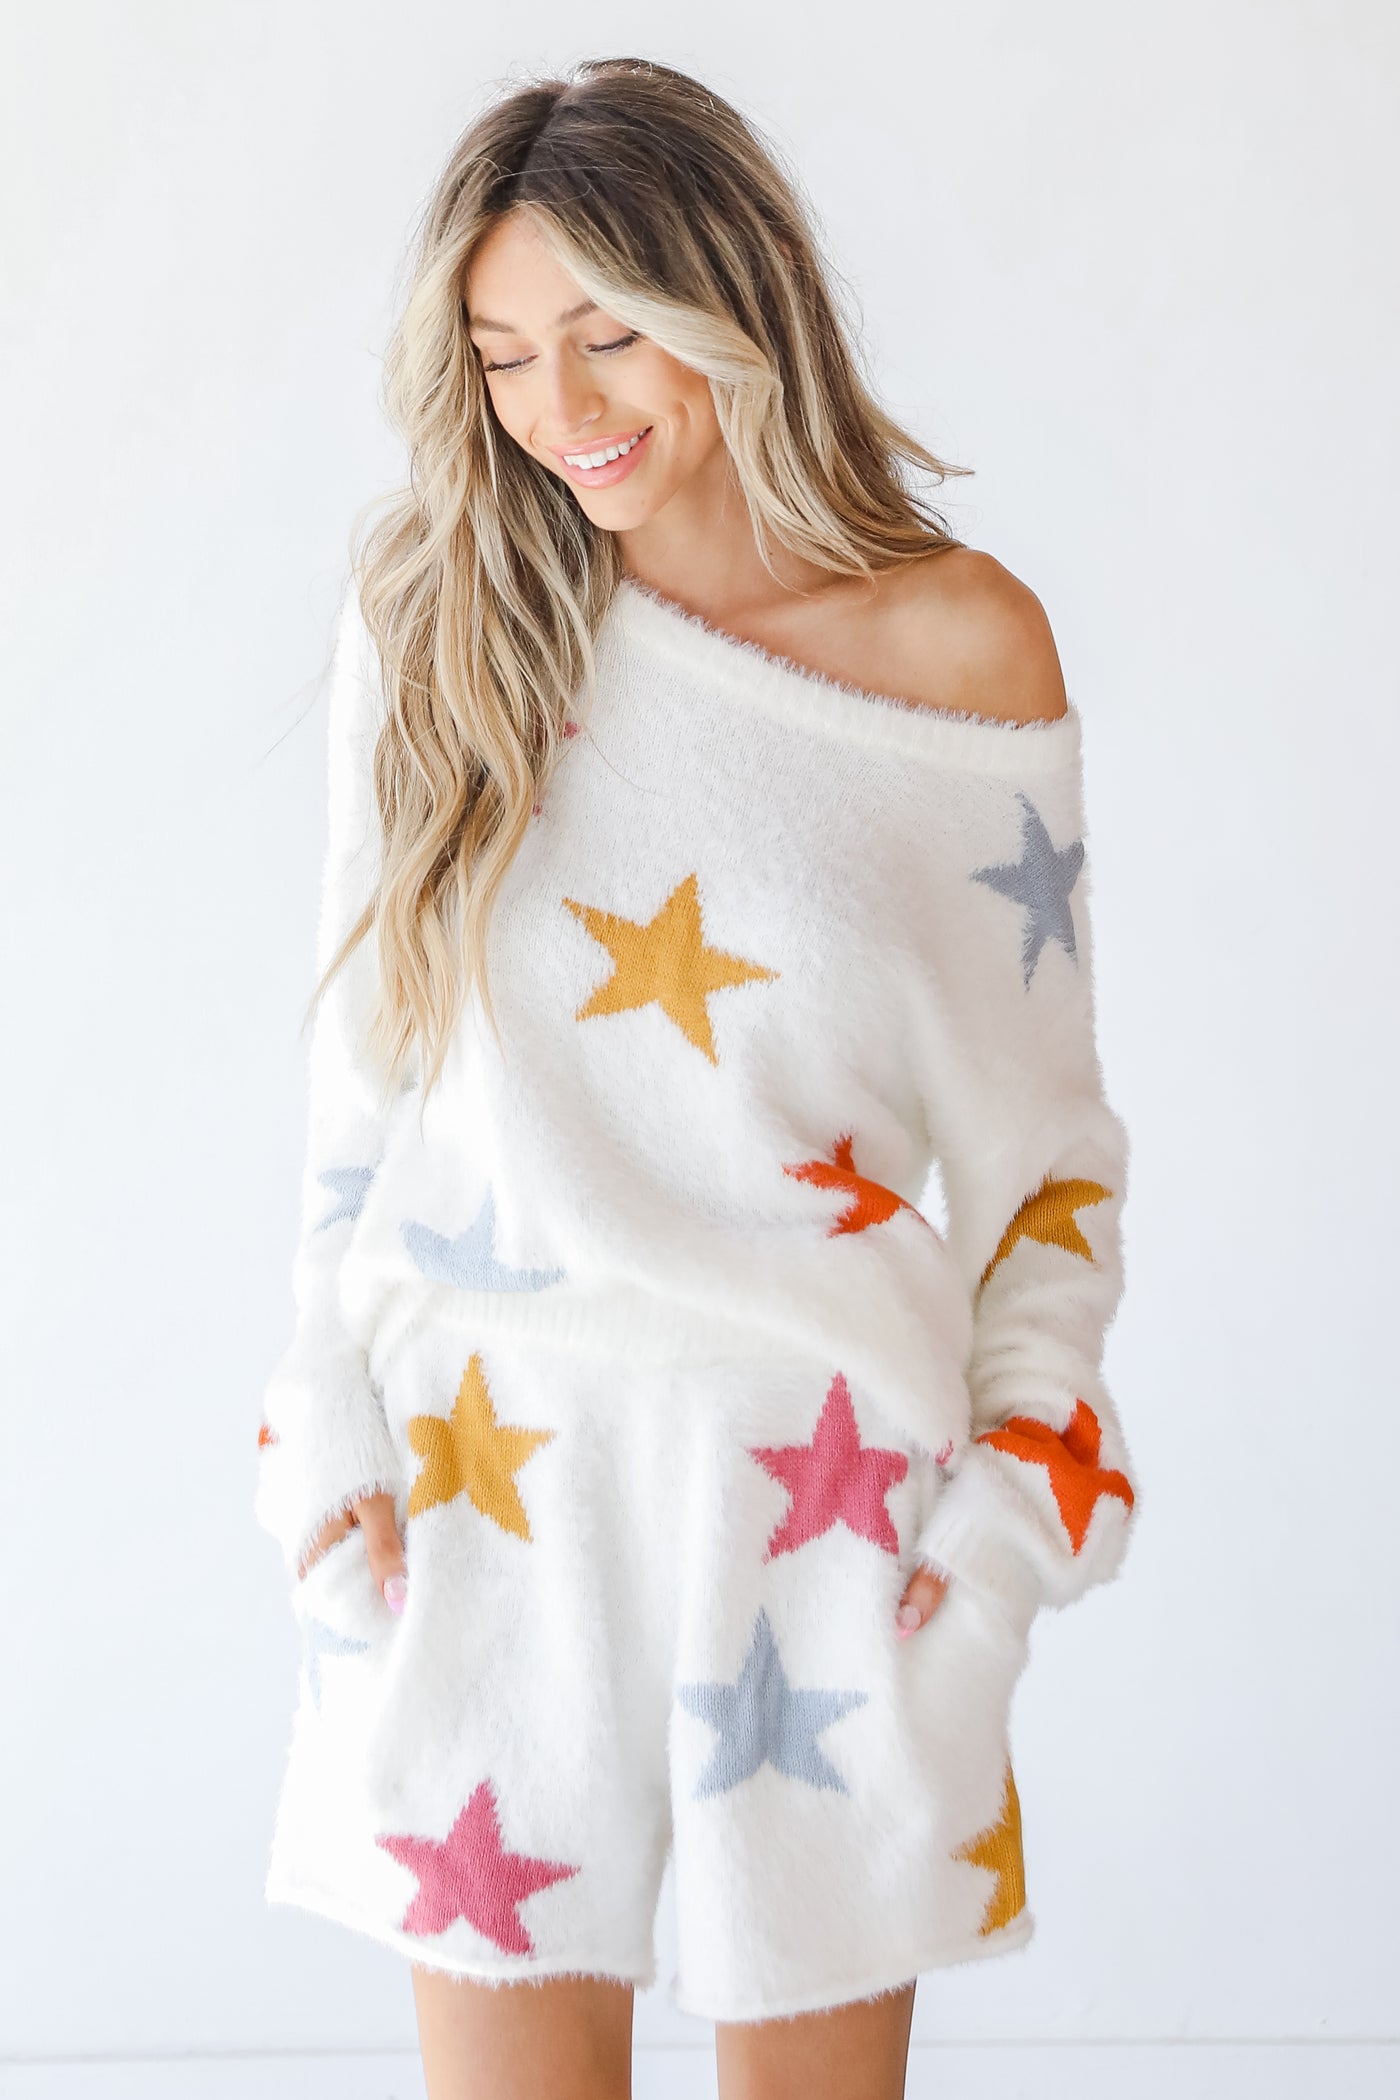 Star Sweater on model